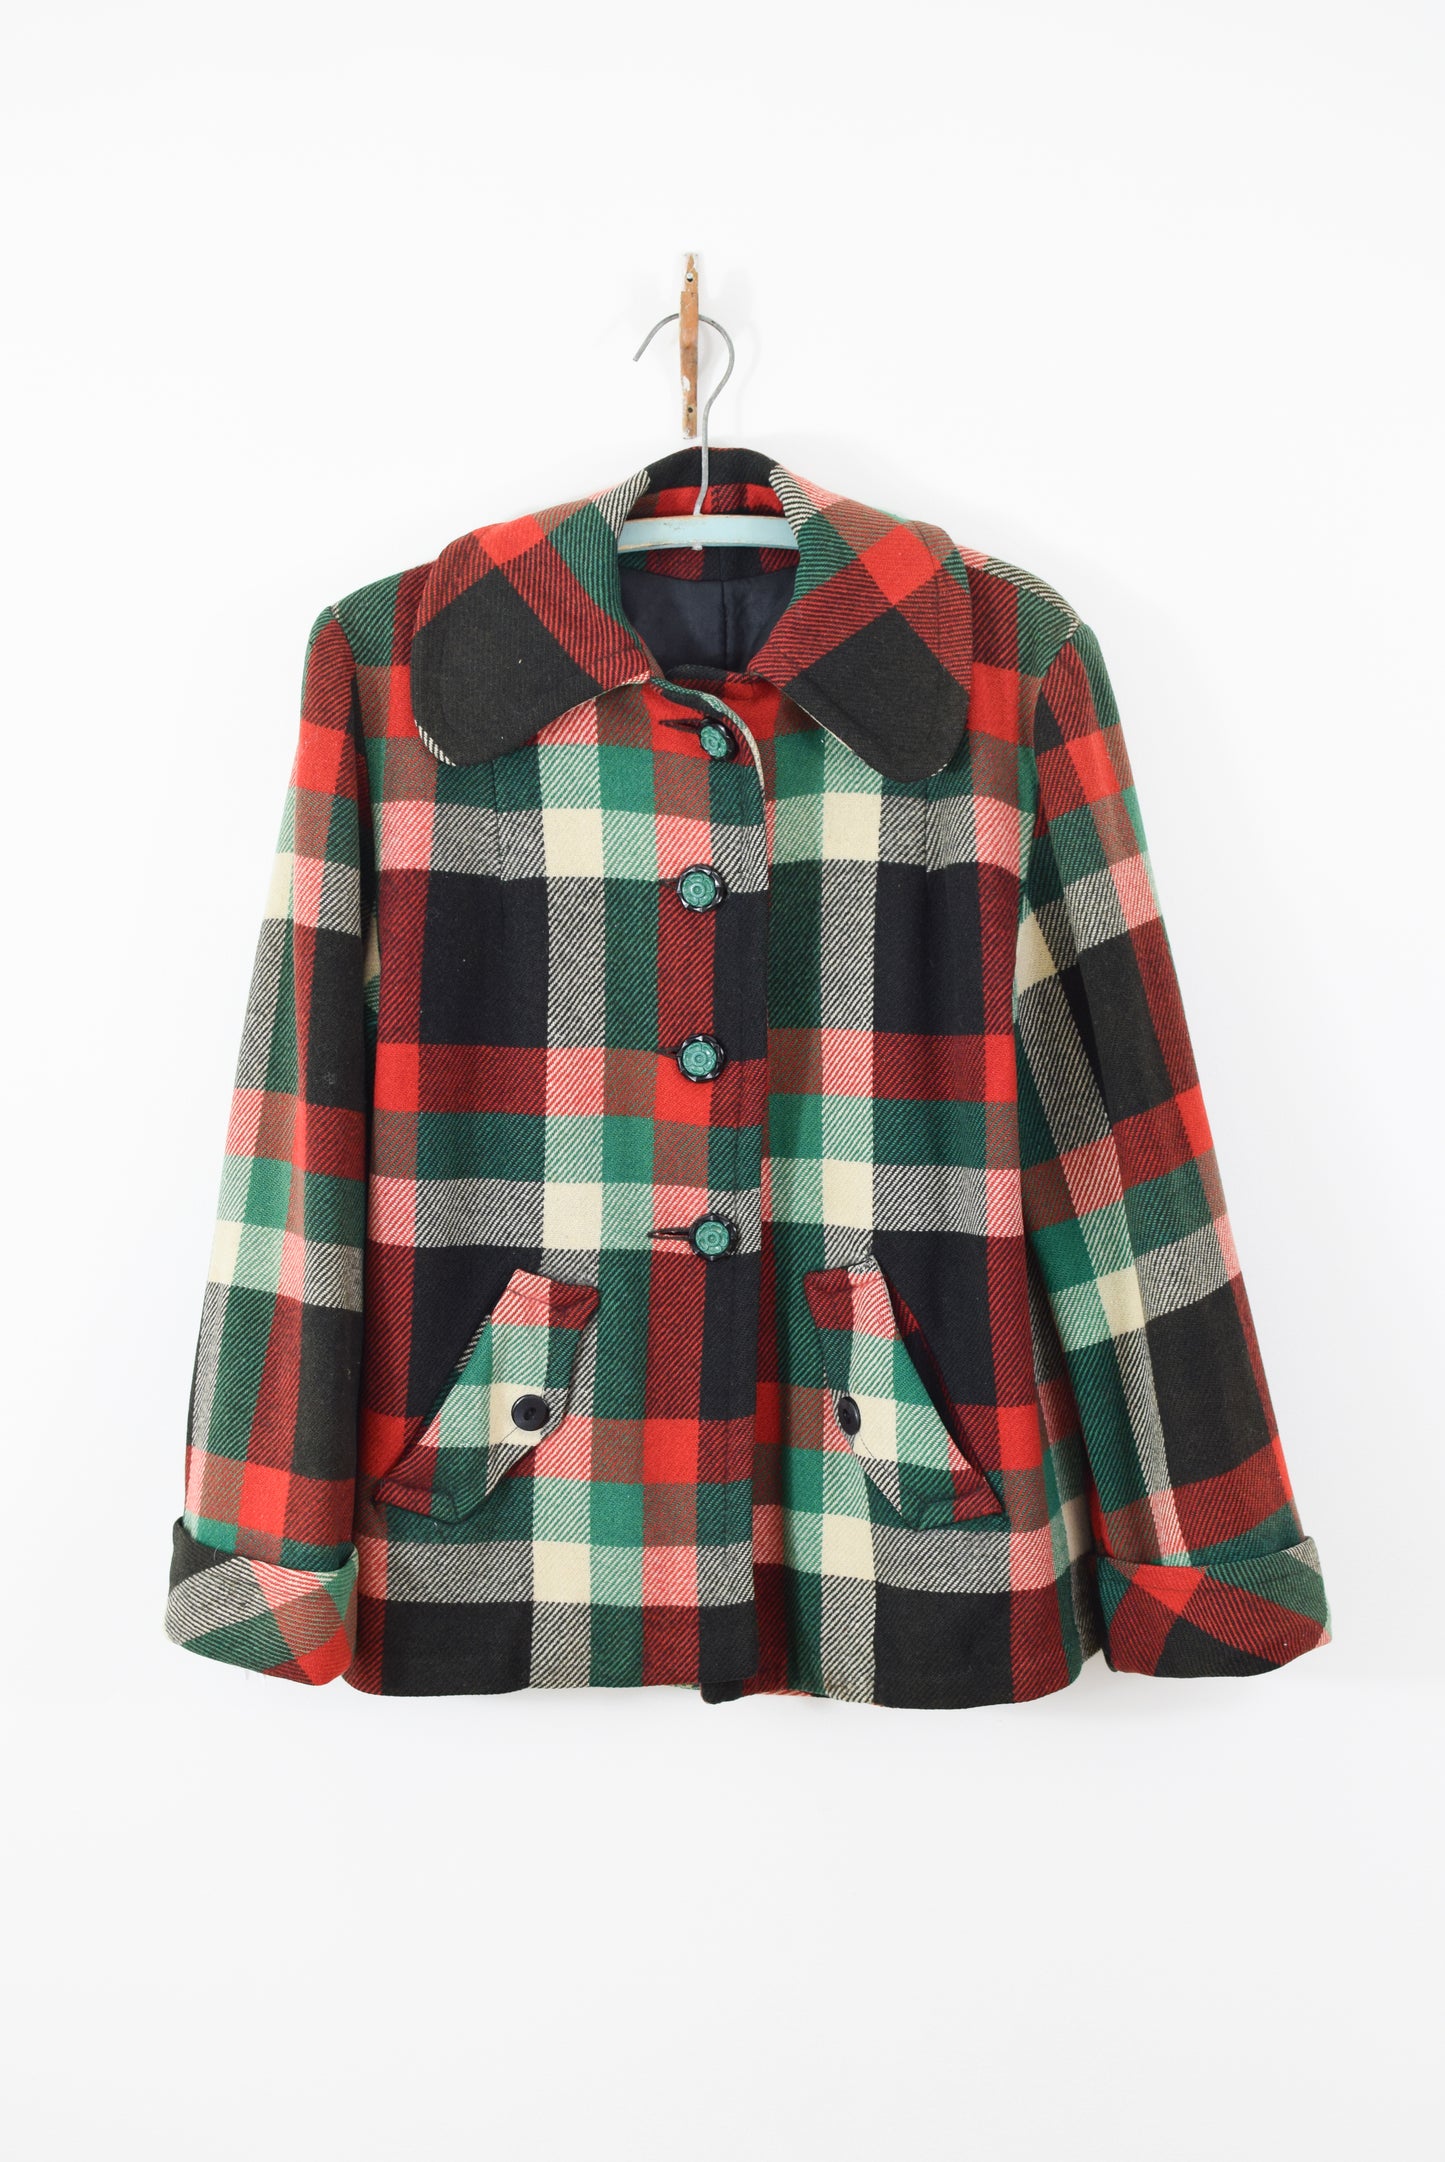 1940s/50s Plaid Wool Swing Jacket | S